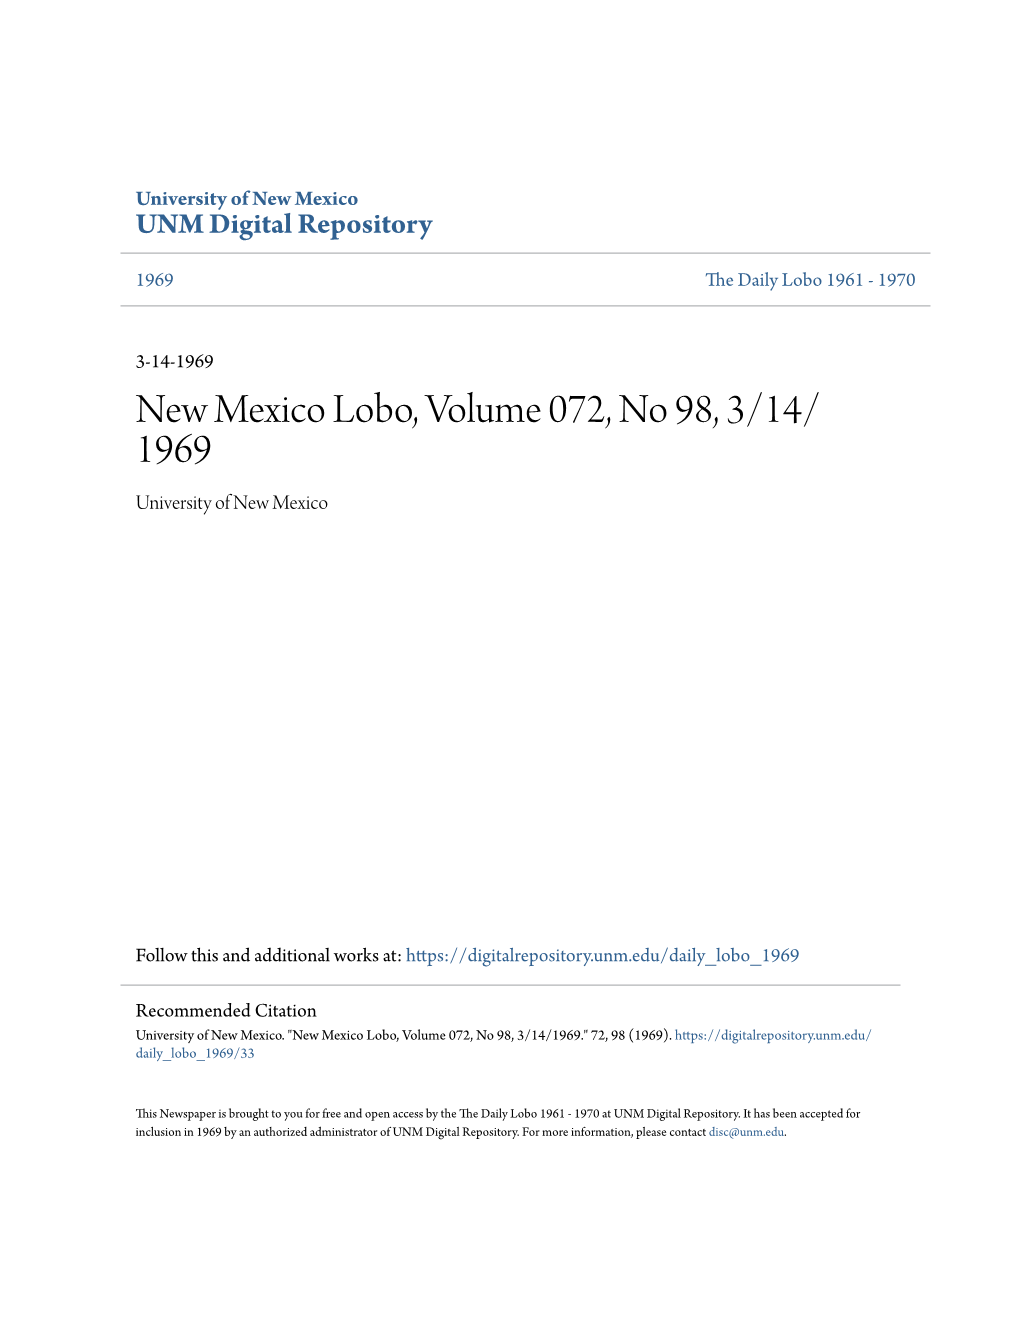 New Mexico Lobo, Volume 072, No 98, 3/14/1969." 72, 98 (1969)